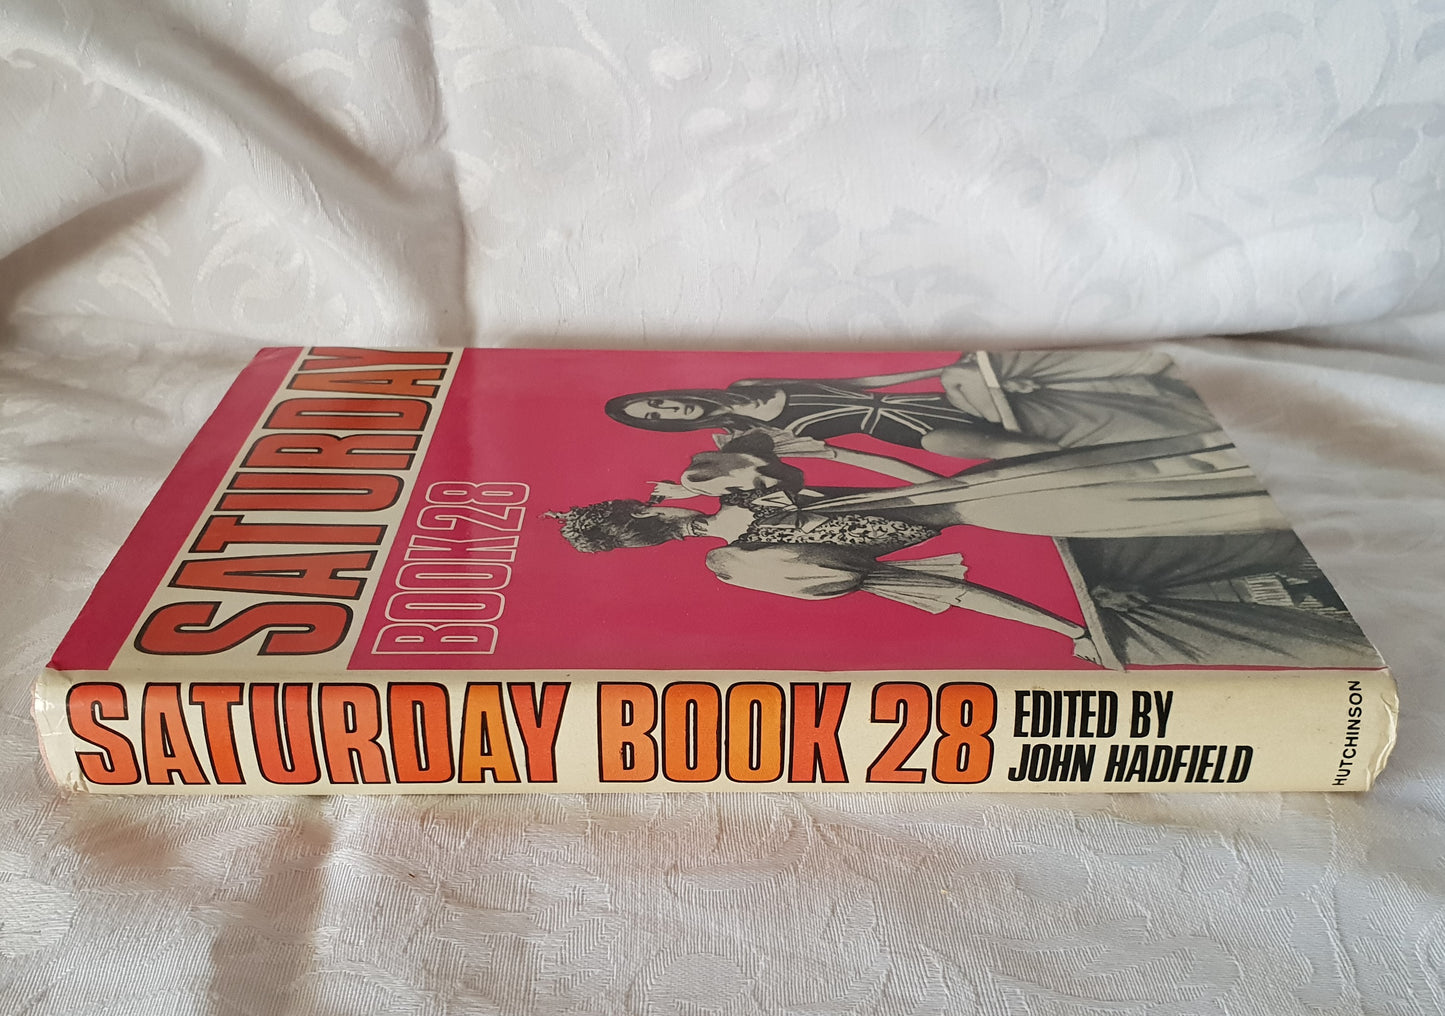 The Saturday Book 28 edited by John Hadfield